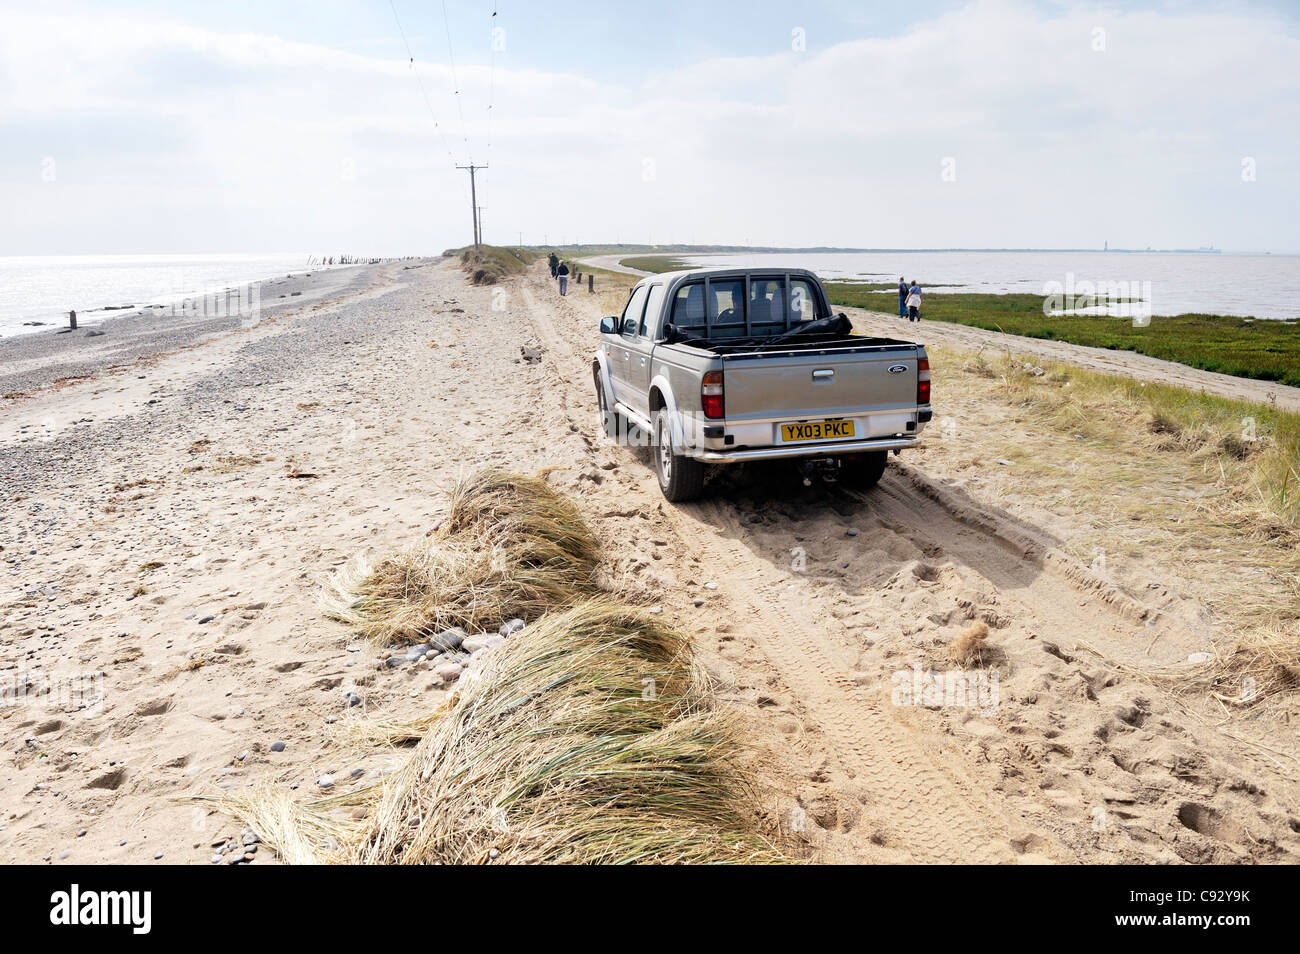 Sea storm coastal erosion at Spurn Head, Yorkshire east coast England. 4 wheel drive car on damaged narrowest point of sand spit Stock Photo